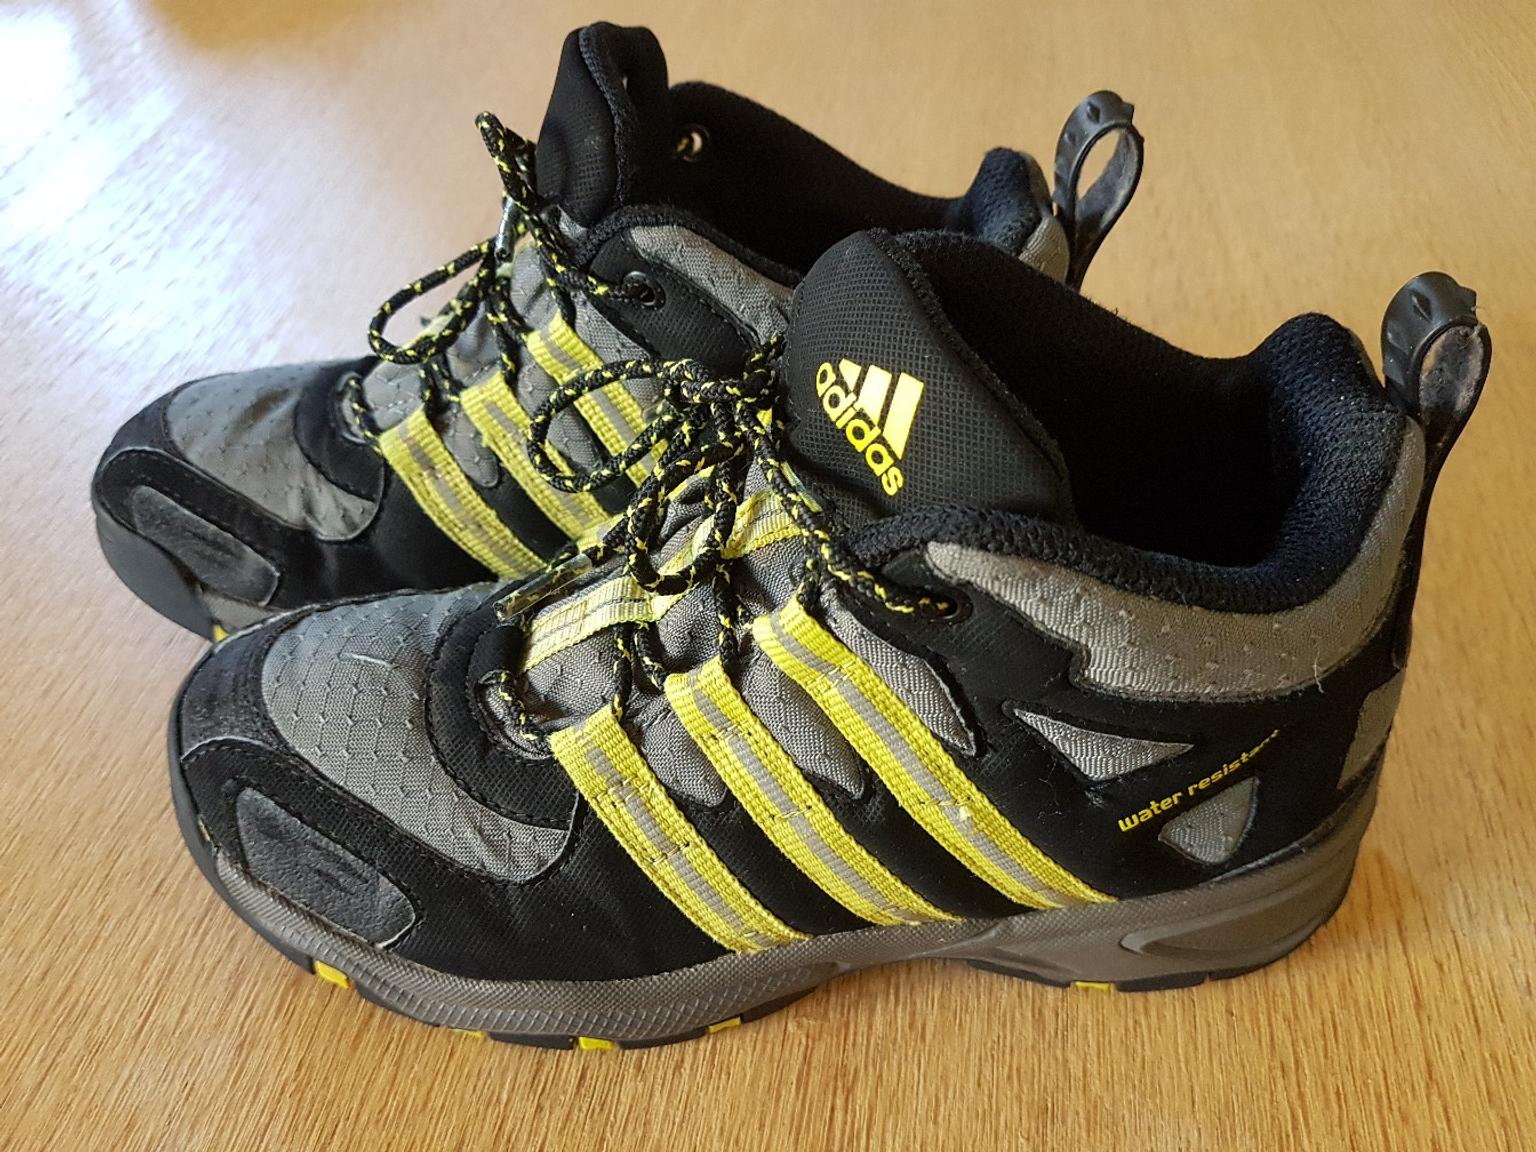 Adidas Trekking Wander Schuhe 34 in 91126 Kammerstein for €10.00 for sale |  Shpock